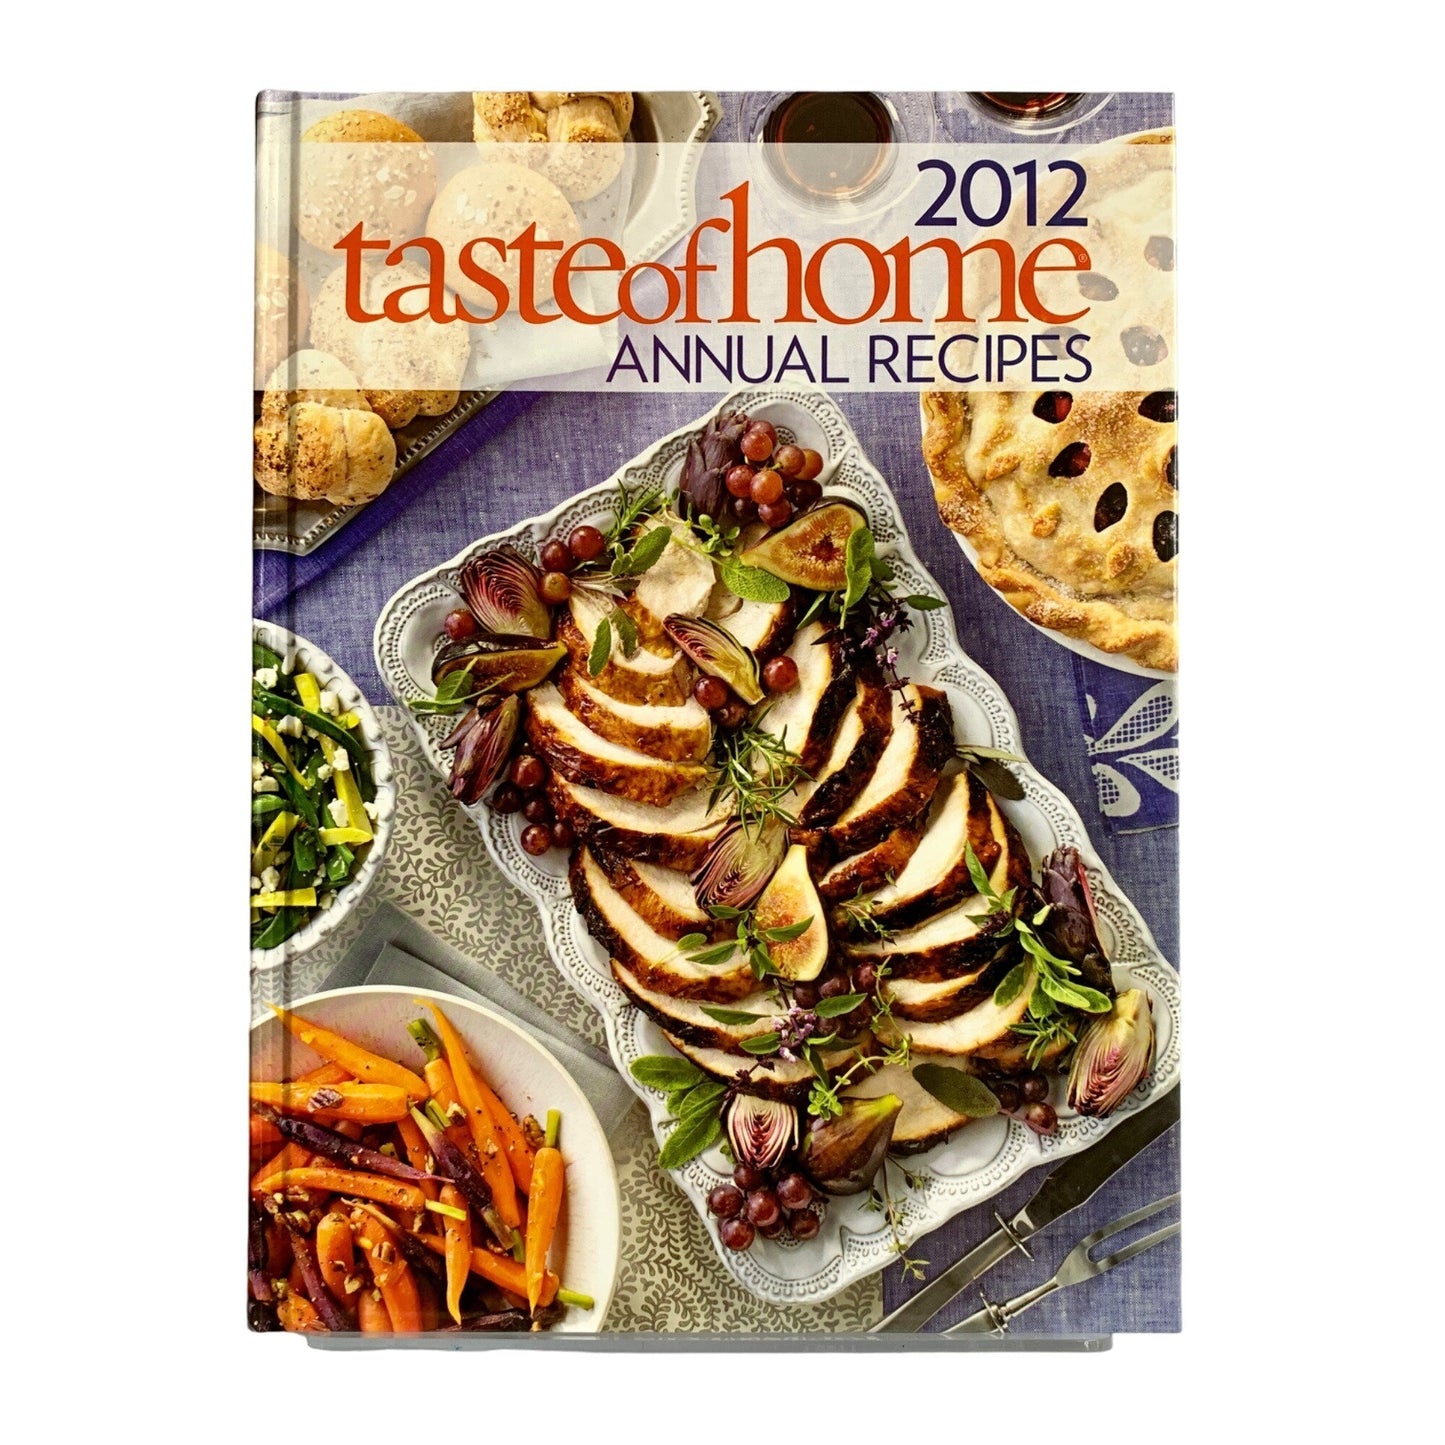 Taste of Home 2012 Annual Recipes Hardcover Book Cookbook